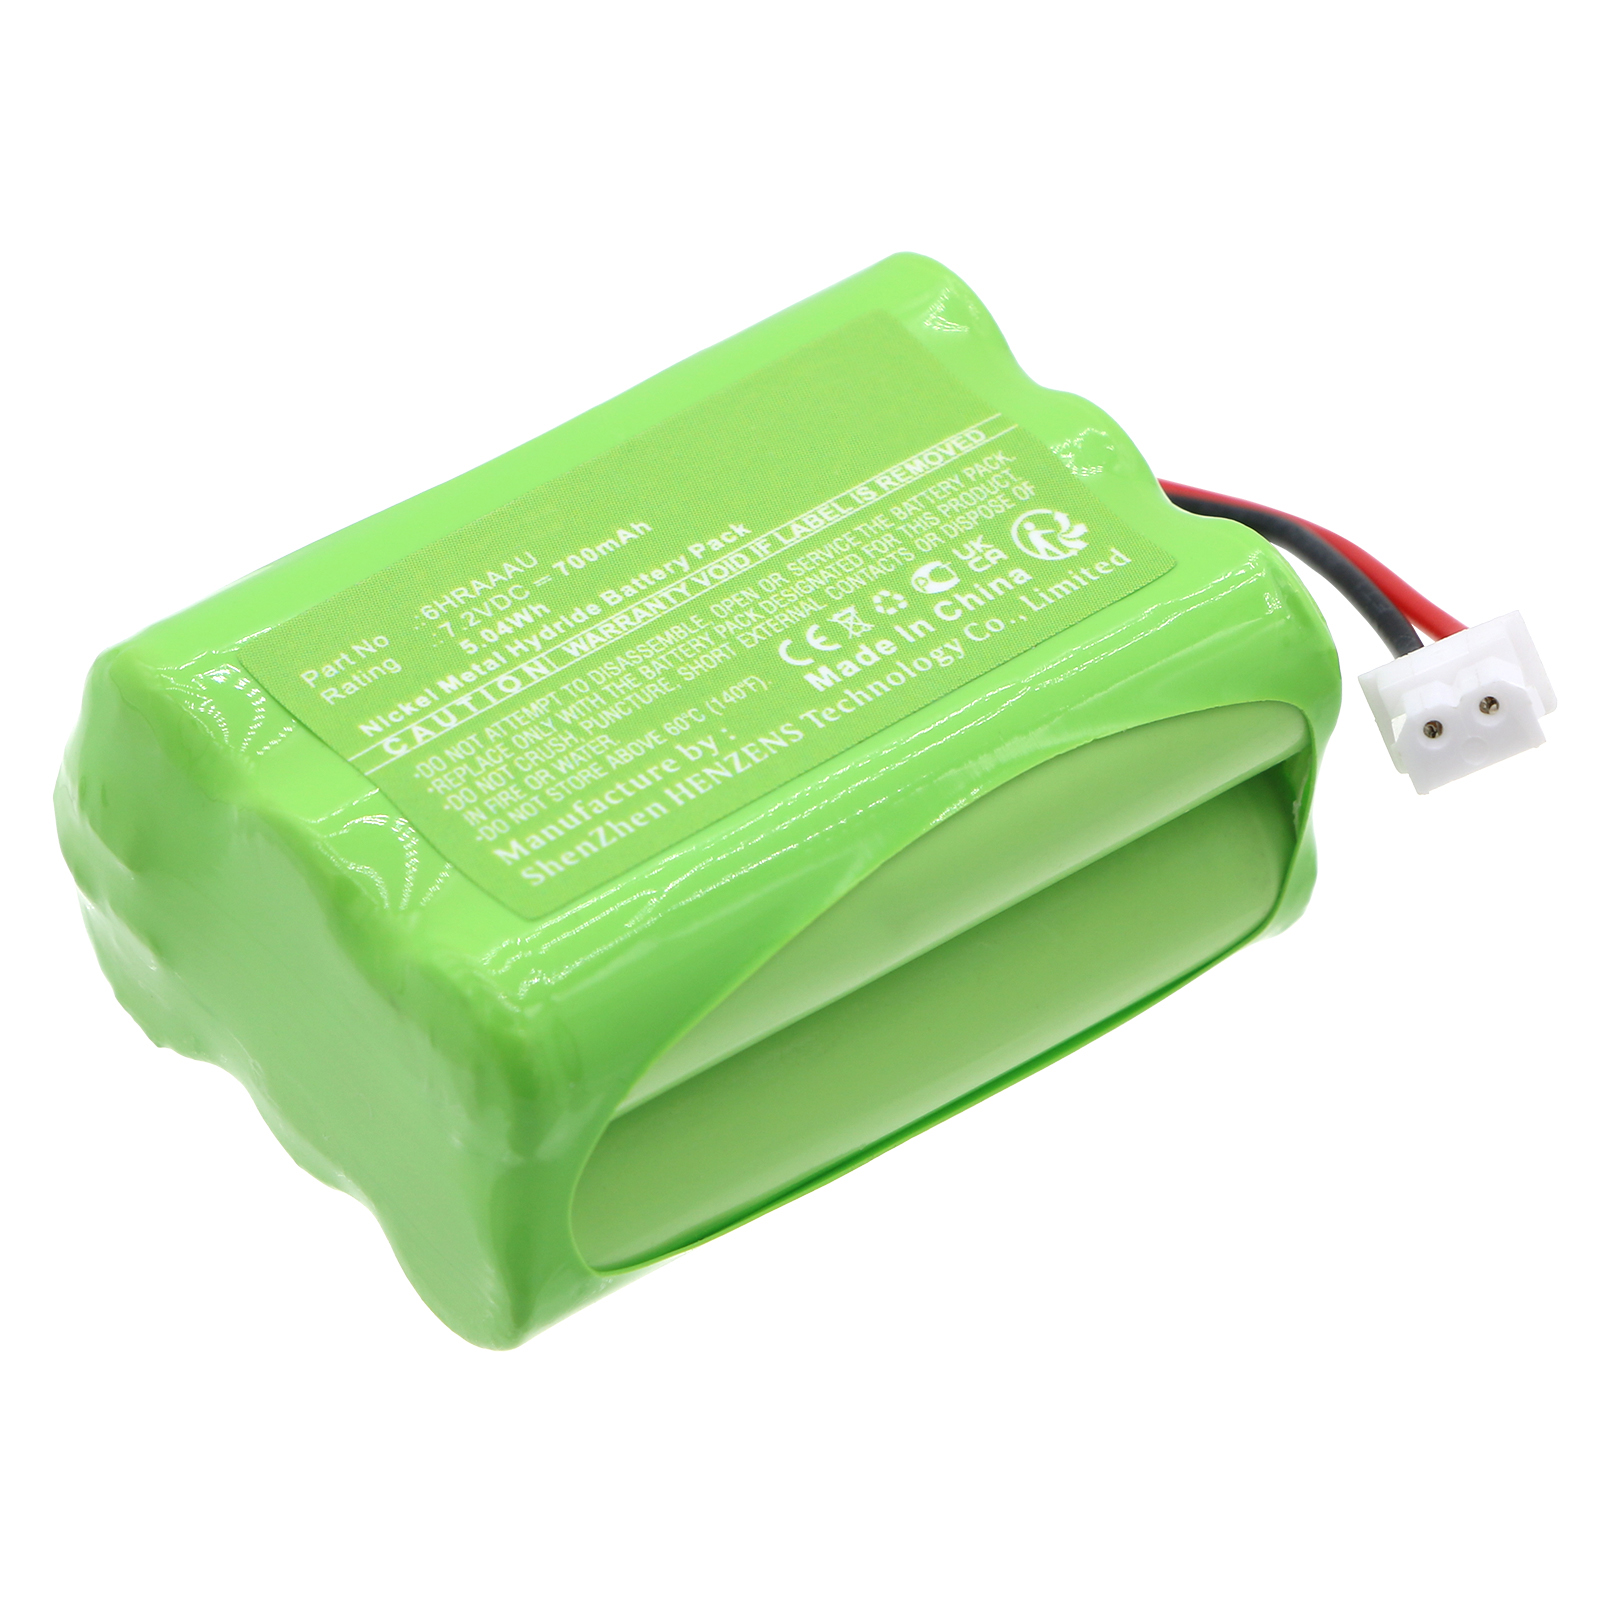 Synergy Digital Alarm System Battery, Compatible with ITI NIC0191 Alarm System Battery (Ni-MH, 7.2V, 700mAh)